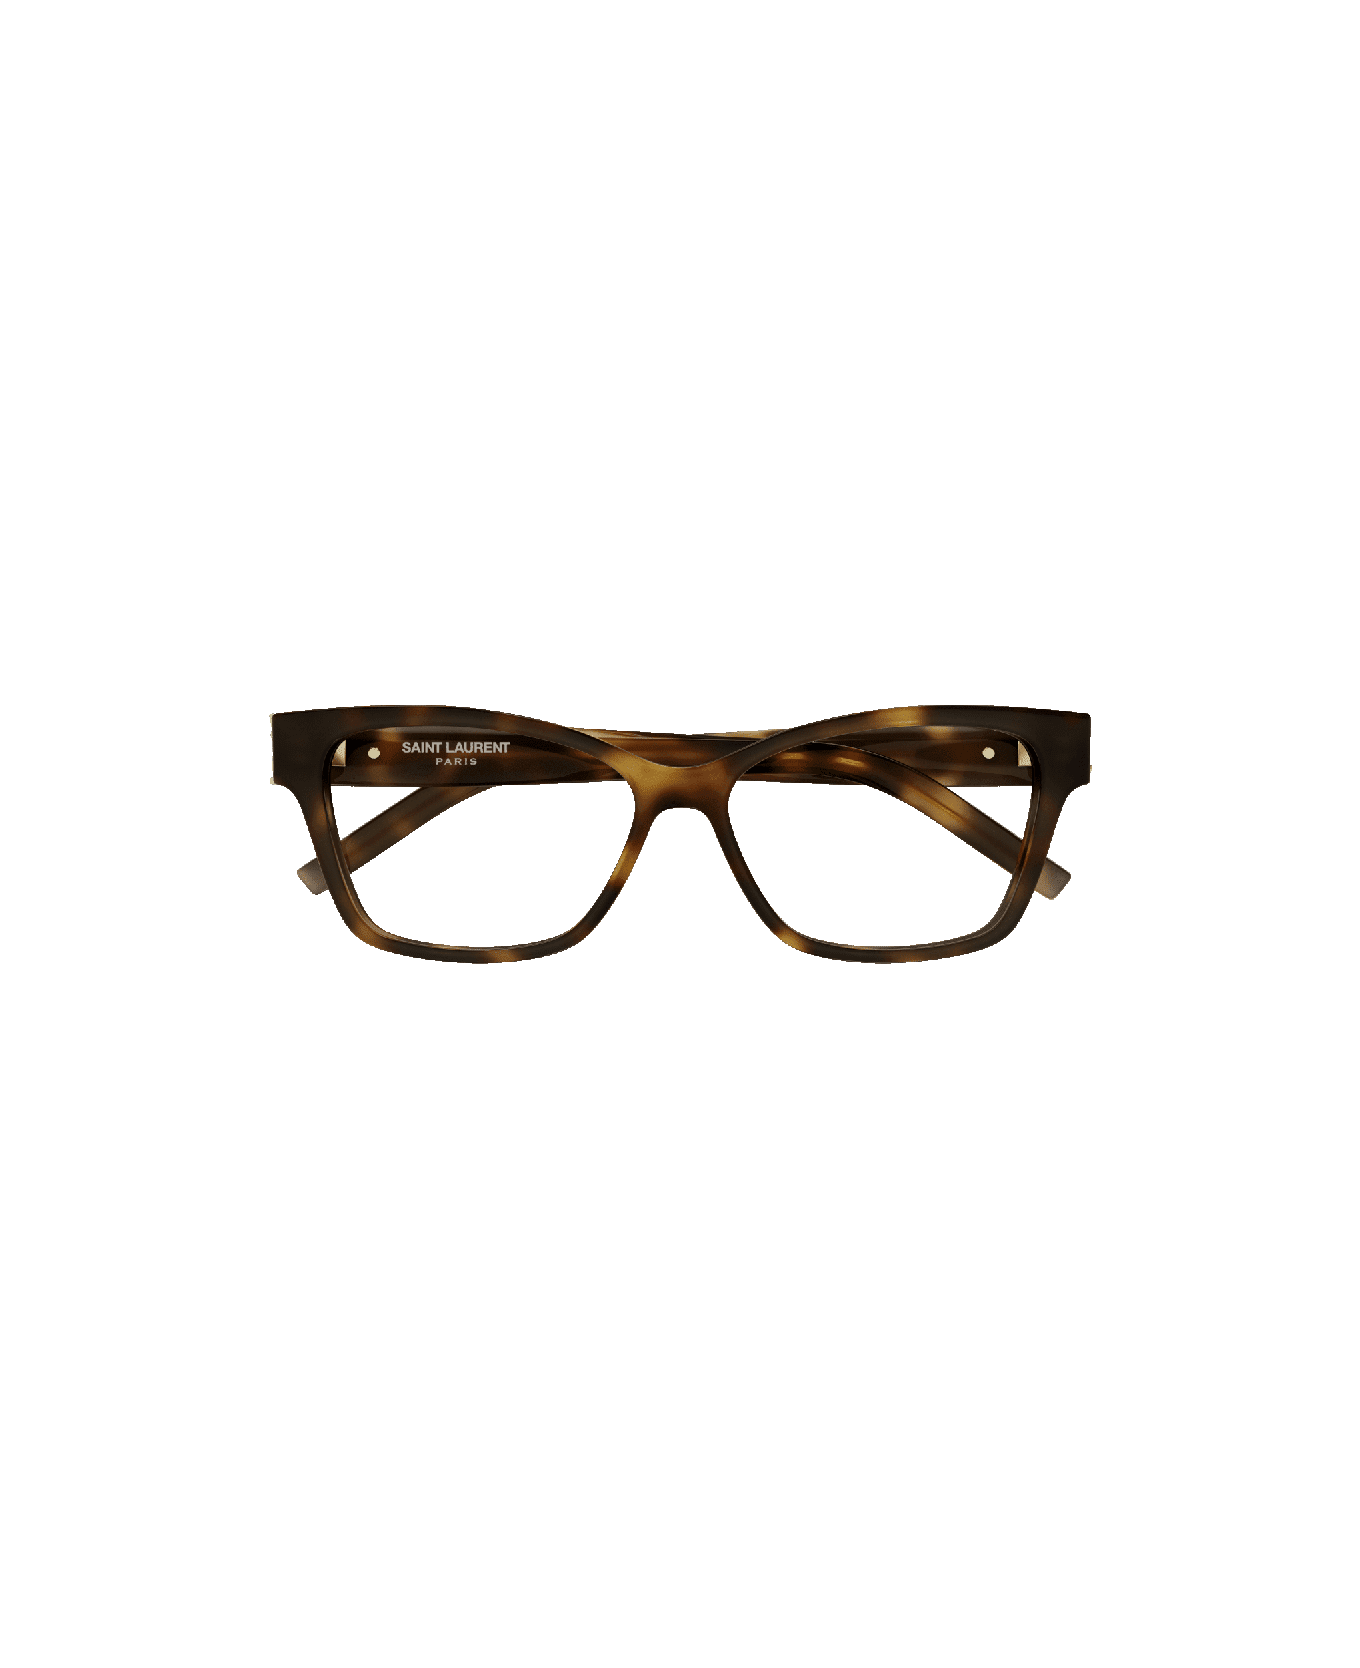 Saint Laurent Eyewear sl M116 002 Glasses アイウェア